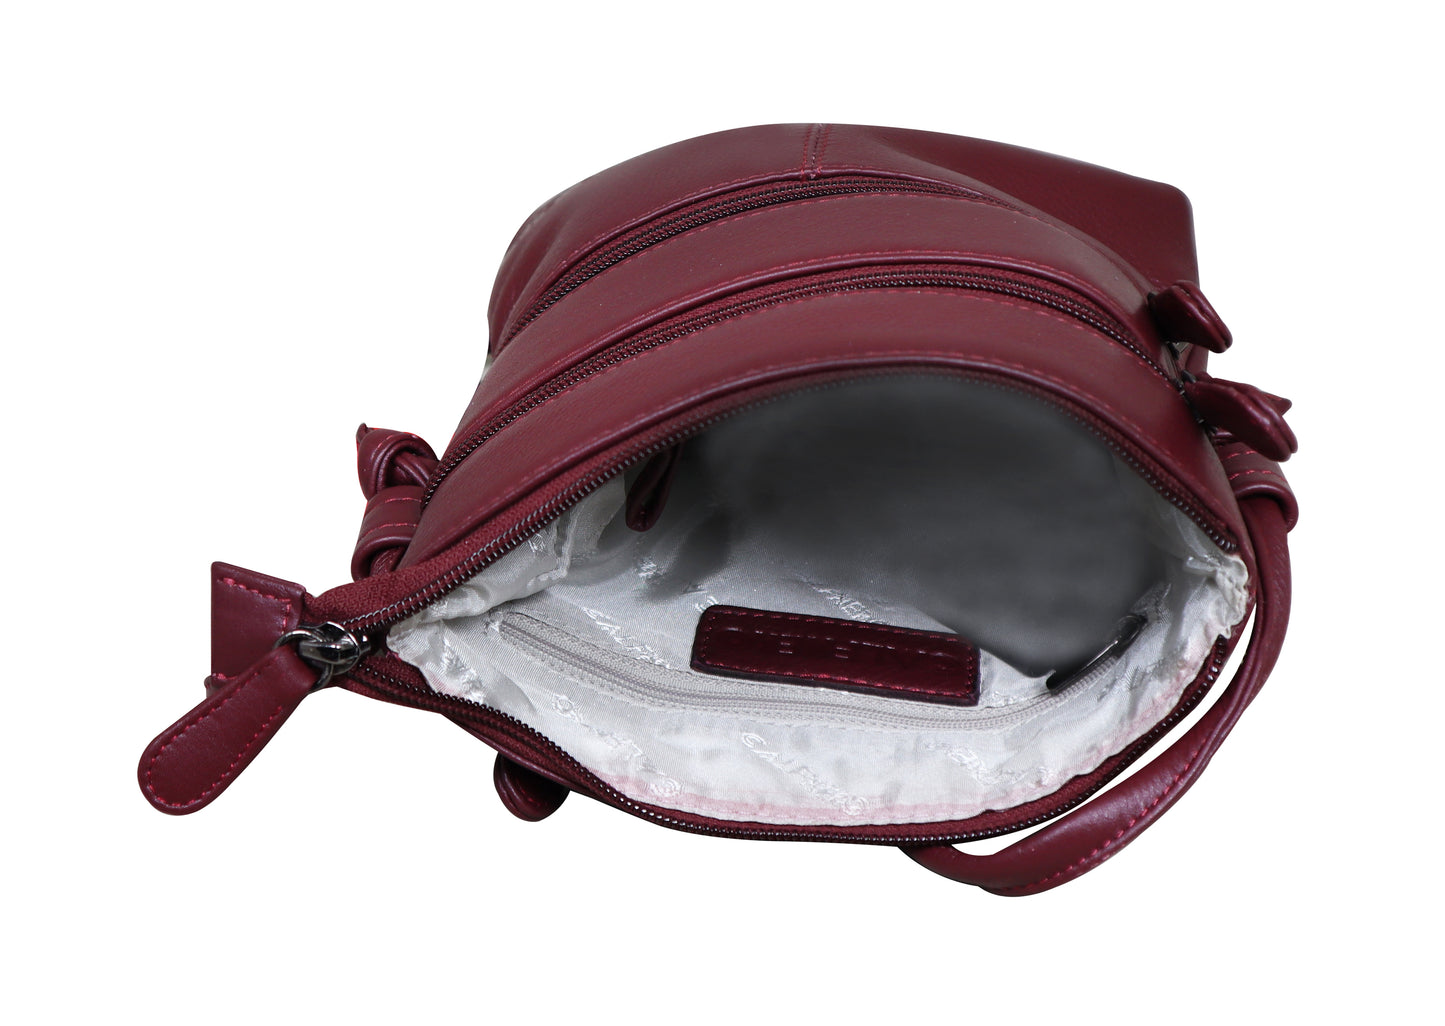 Calfnero Genuine Leather Women's Sling Bag (713984-Brodo)